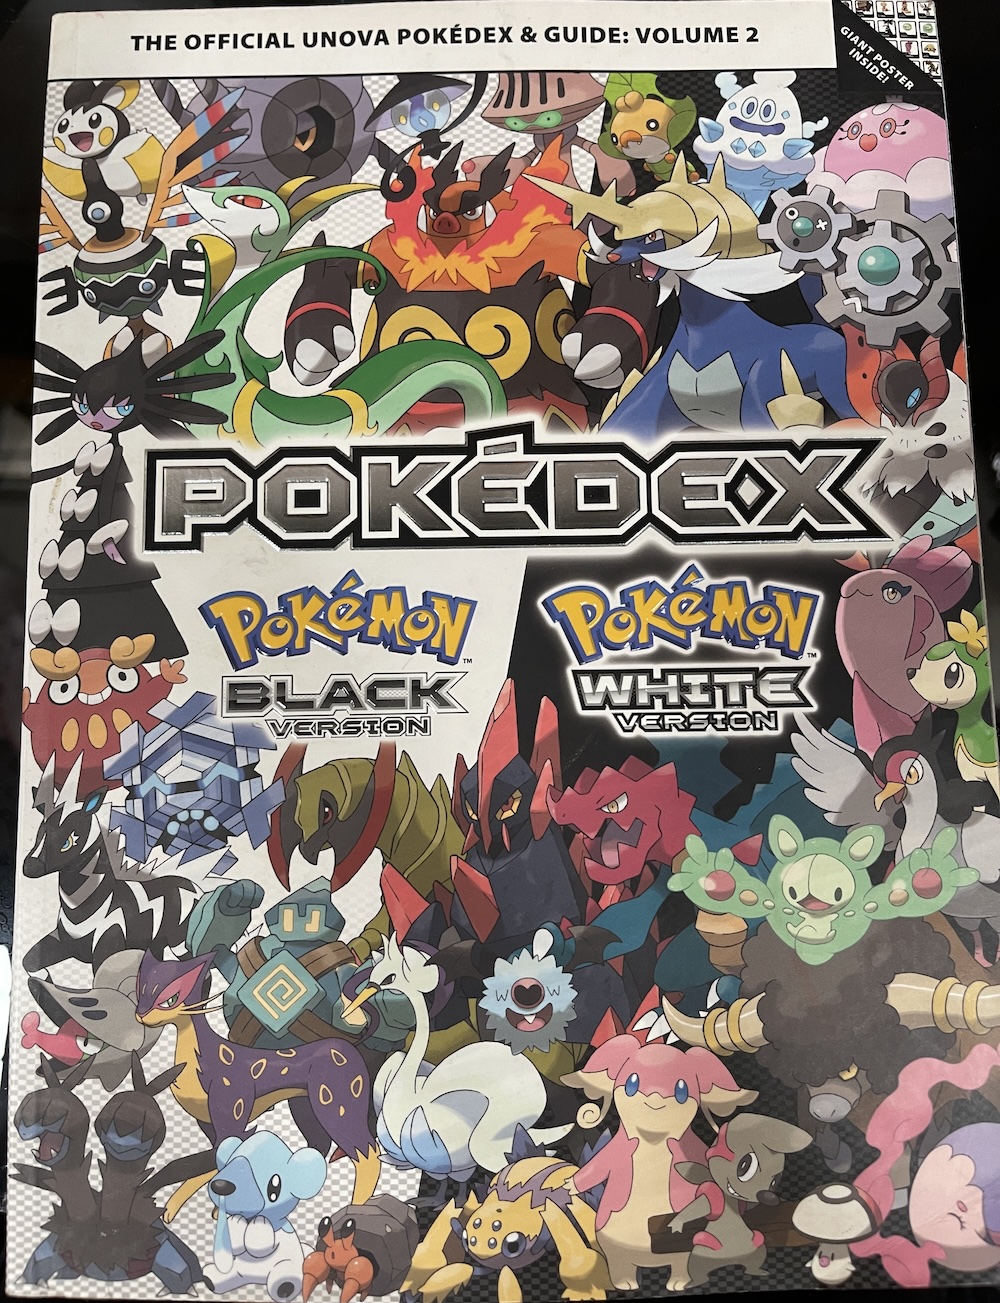 Pokemon Black and Pokemon White Versions: Official National Pokedex : The